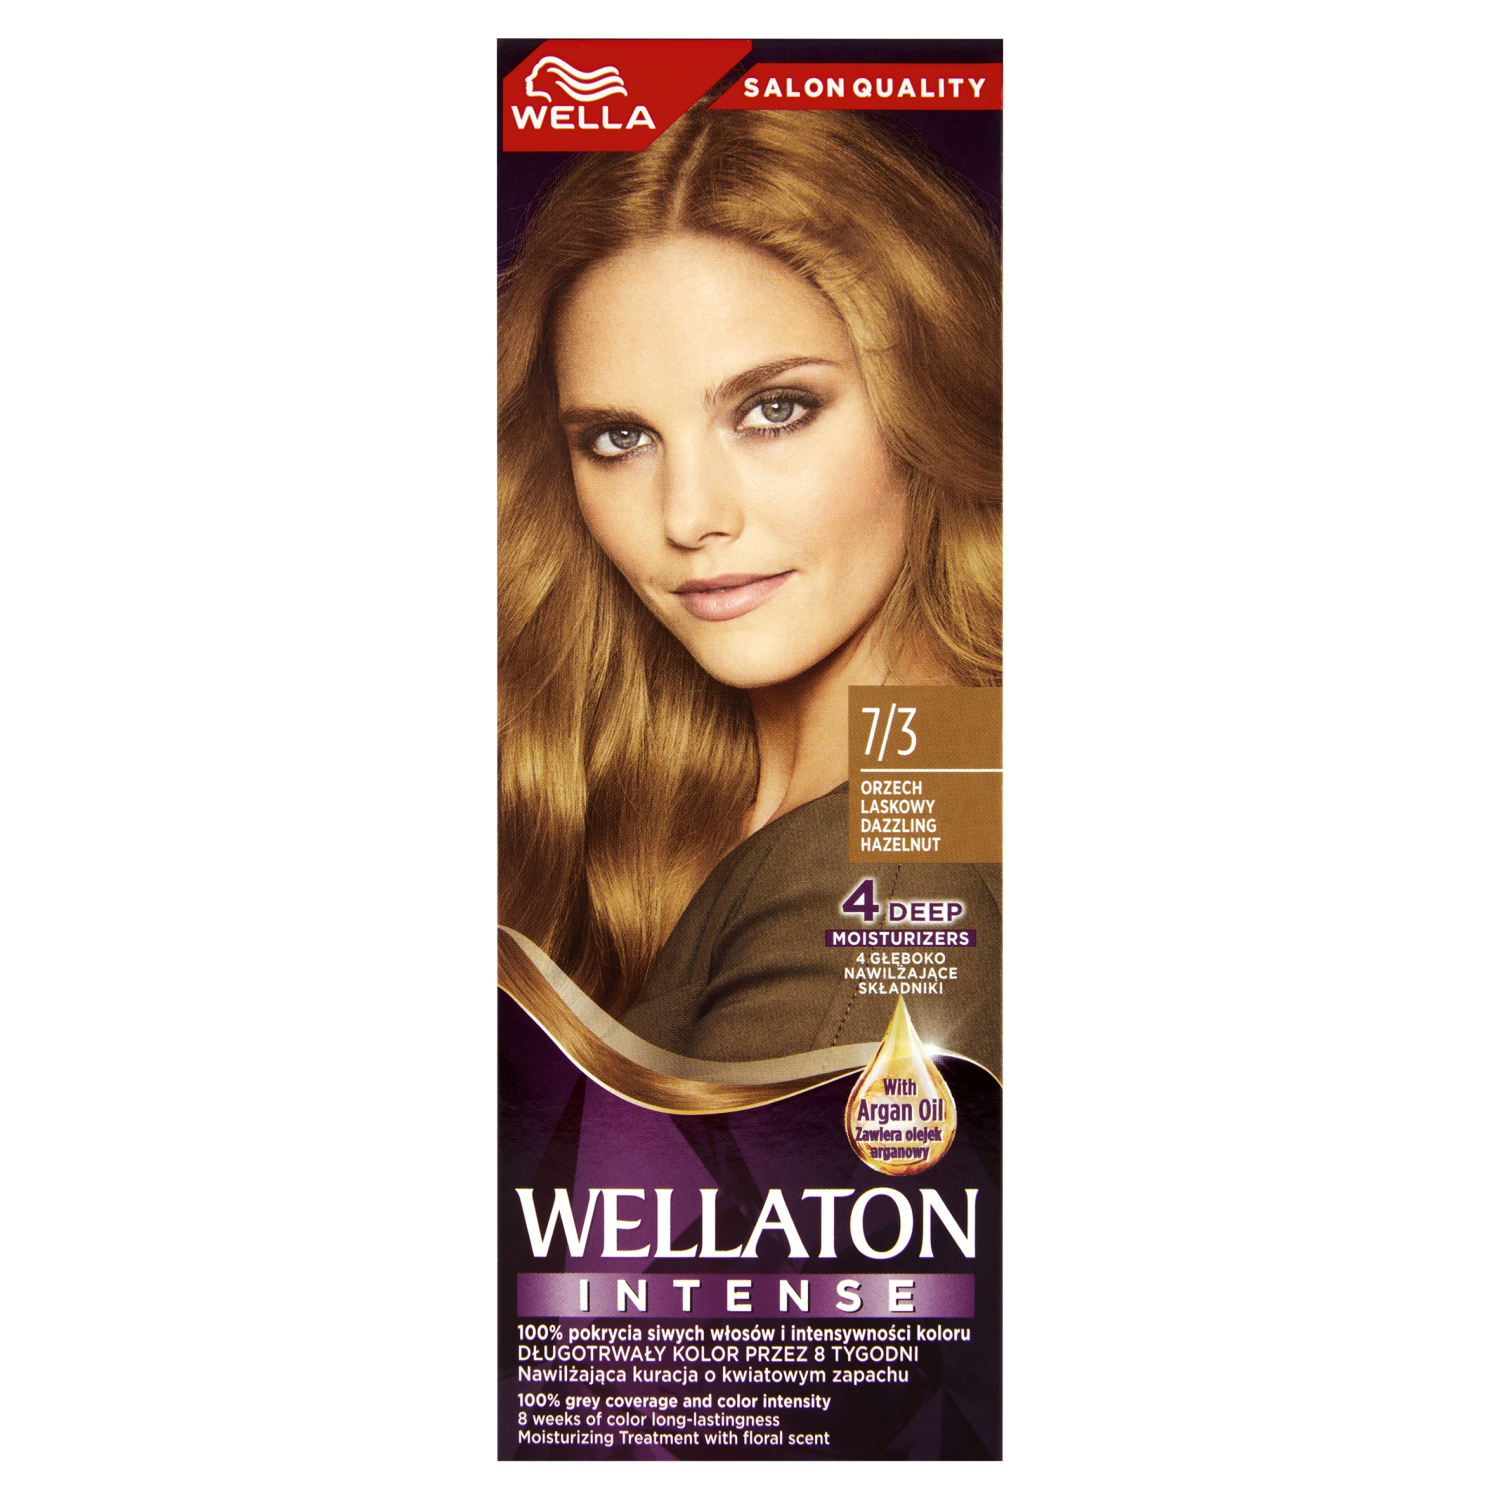 Крем-краска для волос 7/3 лесной орех wella wellaton intense Wella Ton Intense, 1 упаковка цена и фото